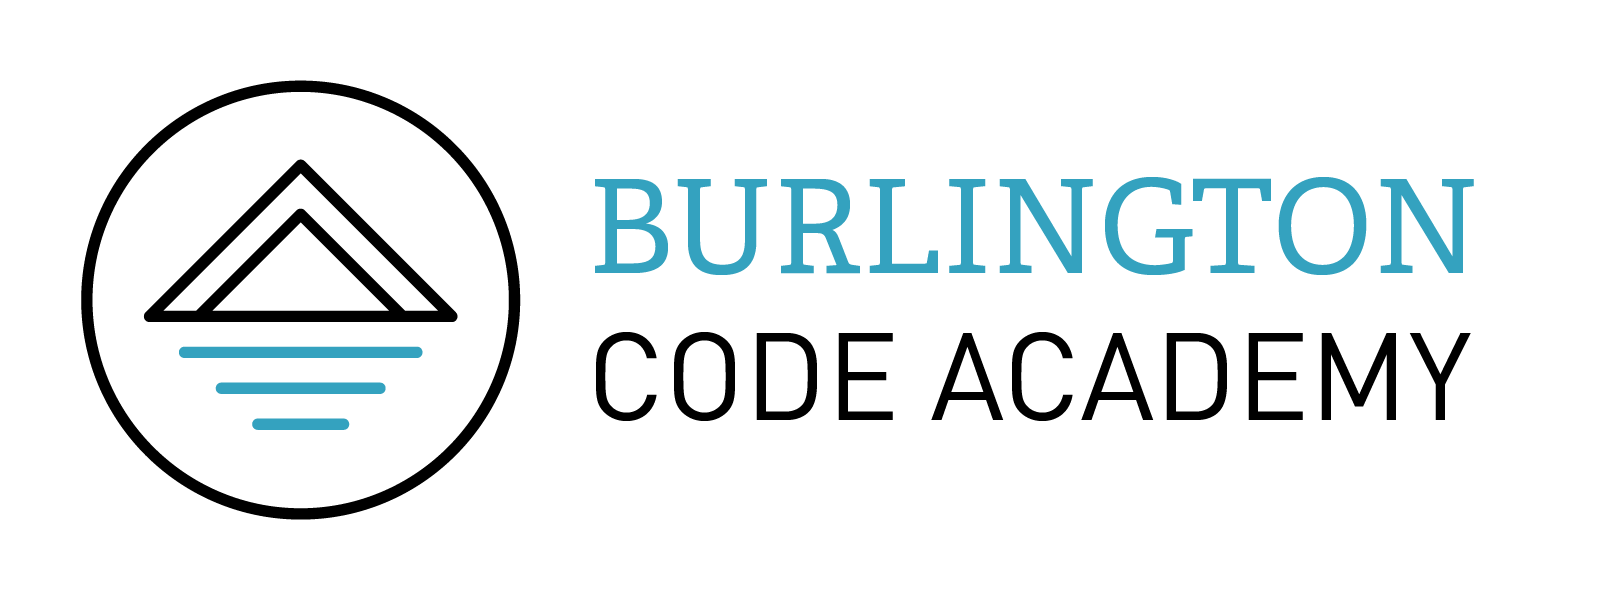 Burlingtion Logo - Burlington Code Academy - Coding Bootcamp. Learn To Code.